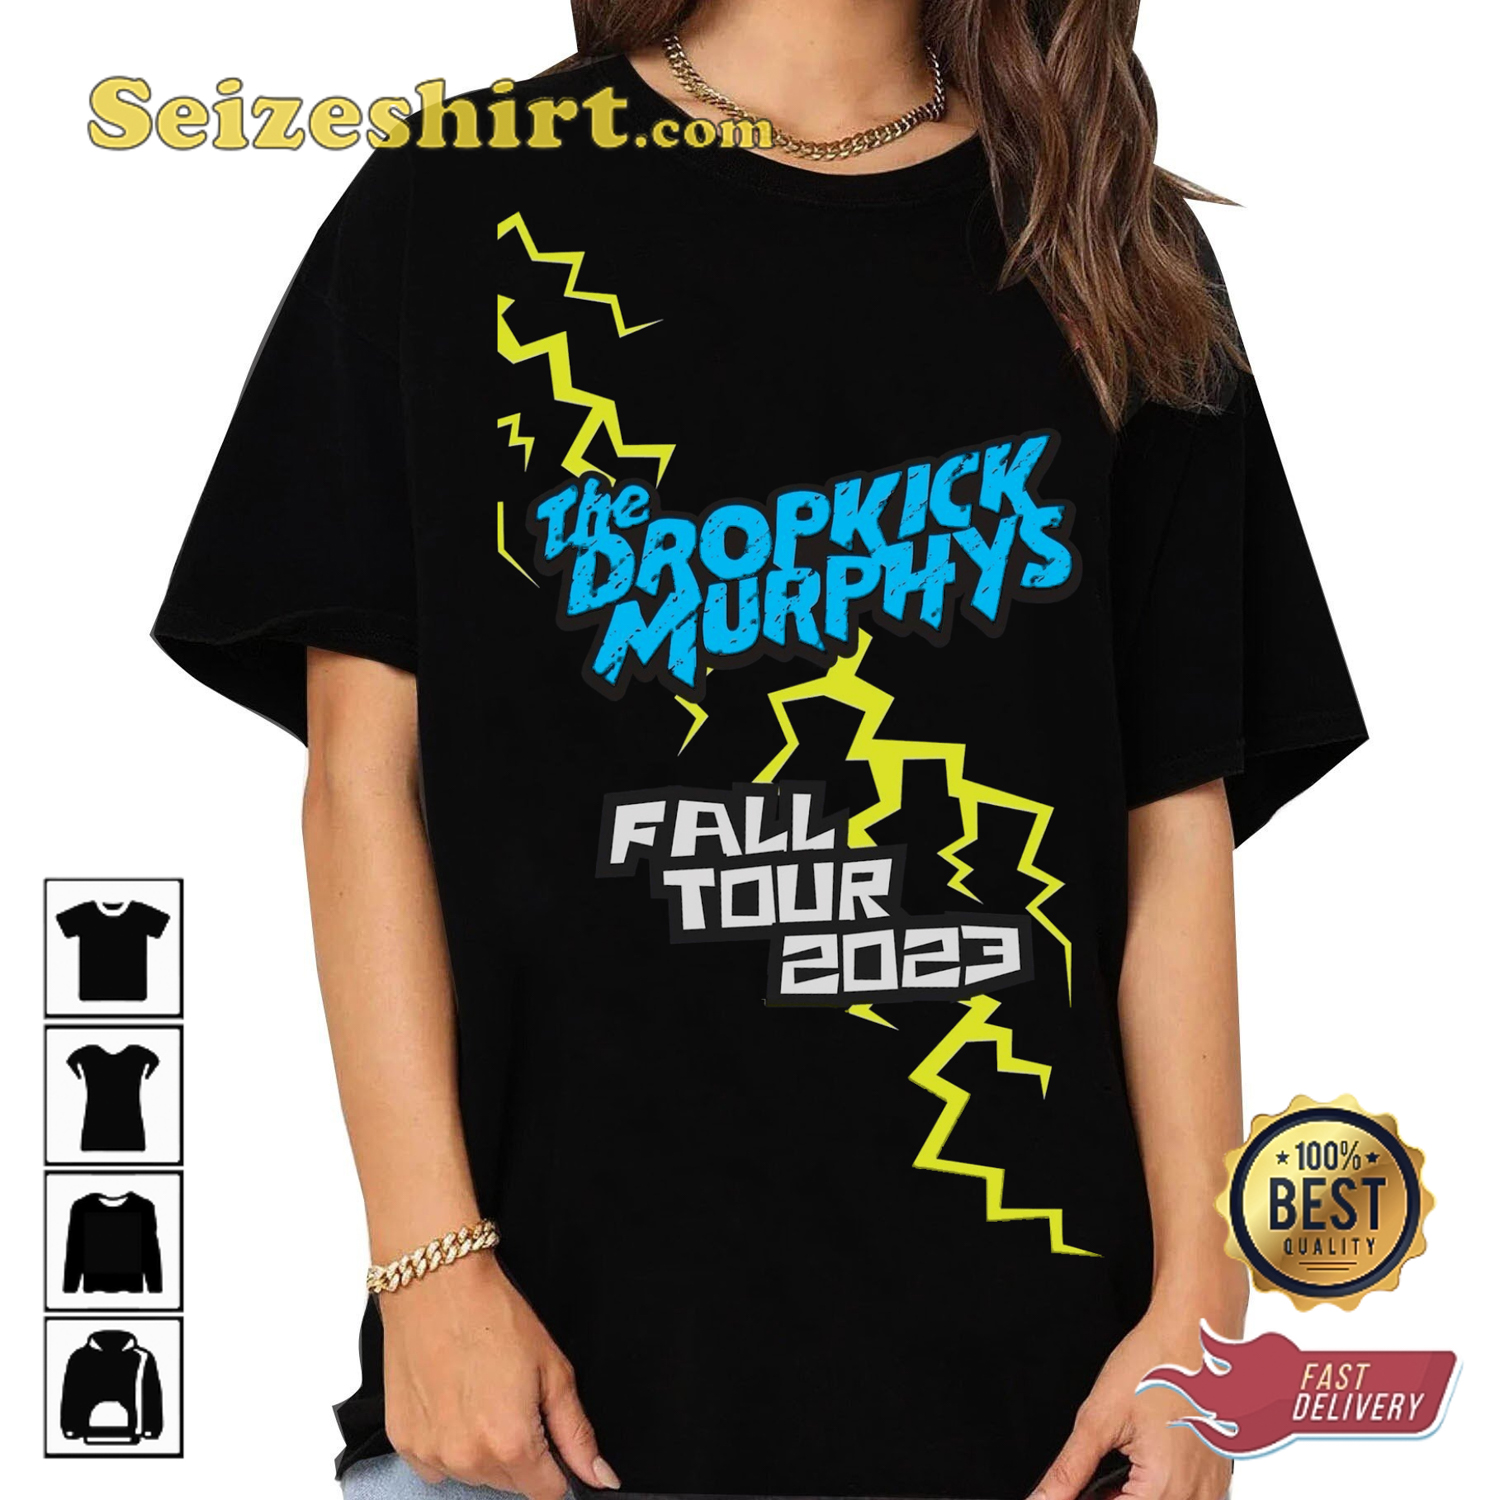 Dropkick Murphys Fall Tour 2023 Music Concert T-shirt